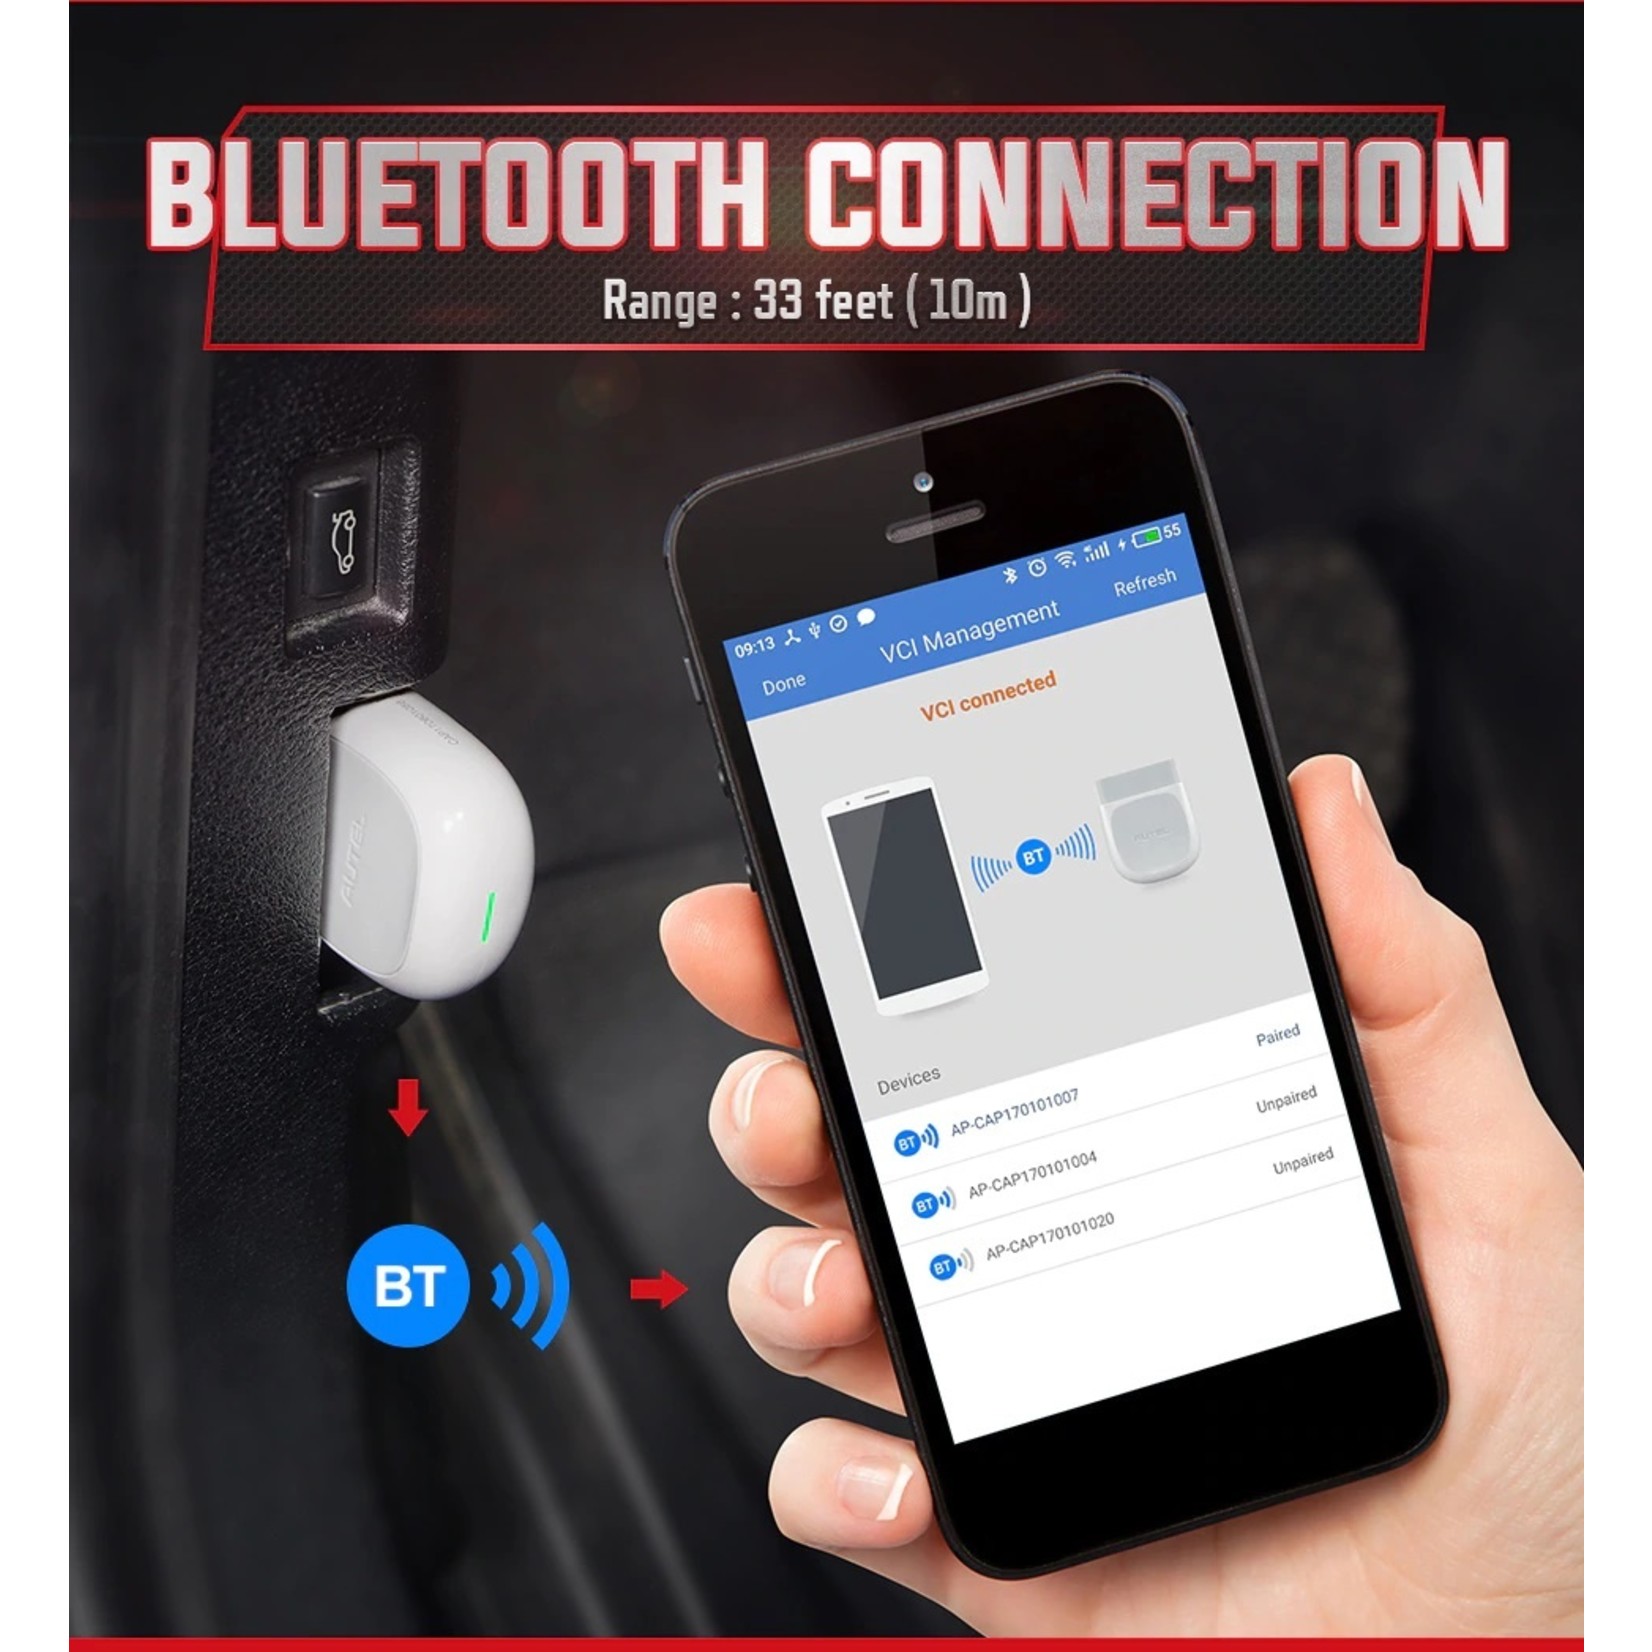 Autel Autel AP200 Bluetooth OBD2 Scanner Code Reader met Volledige Systeem Diagnoses, AutoVIN, Olie/EPB/BMS/SAS/TPMS/DPF Reset IMMO Service voor Familie DIY gebruikers